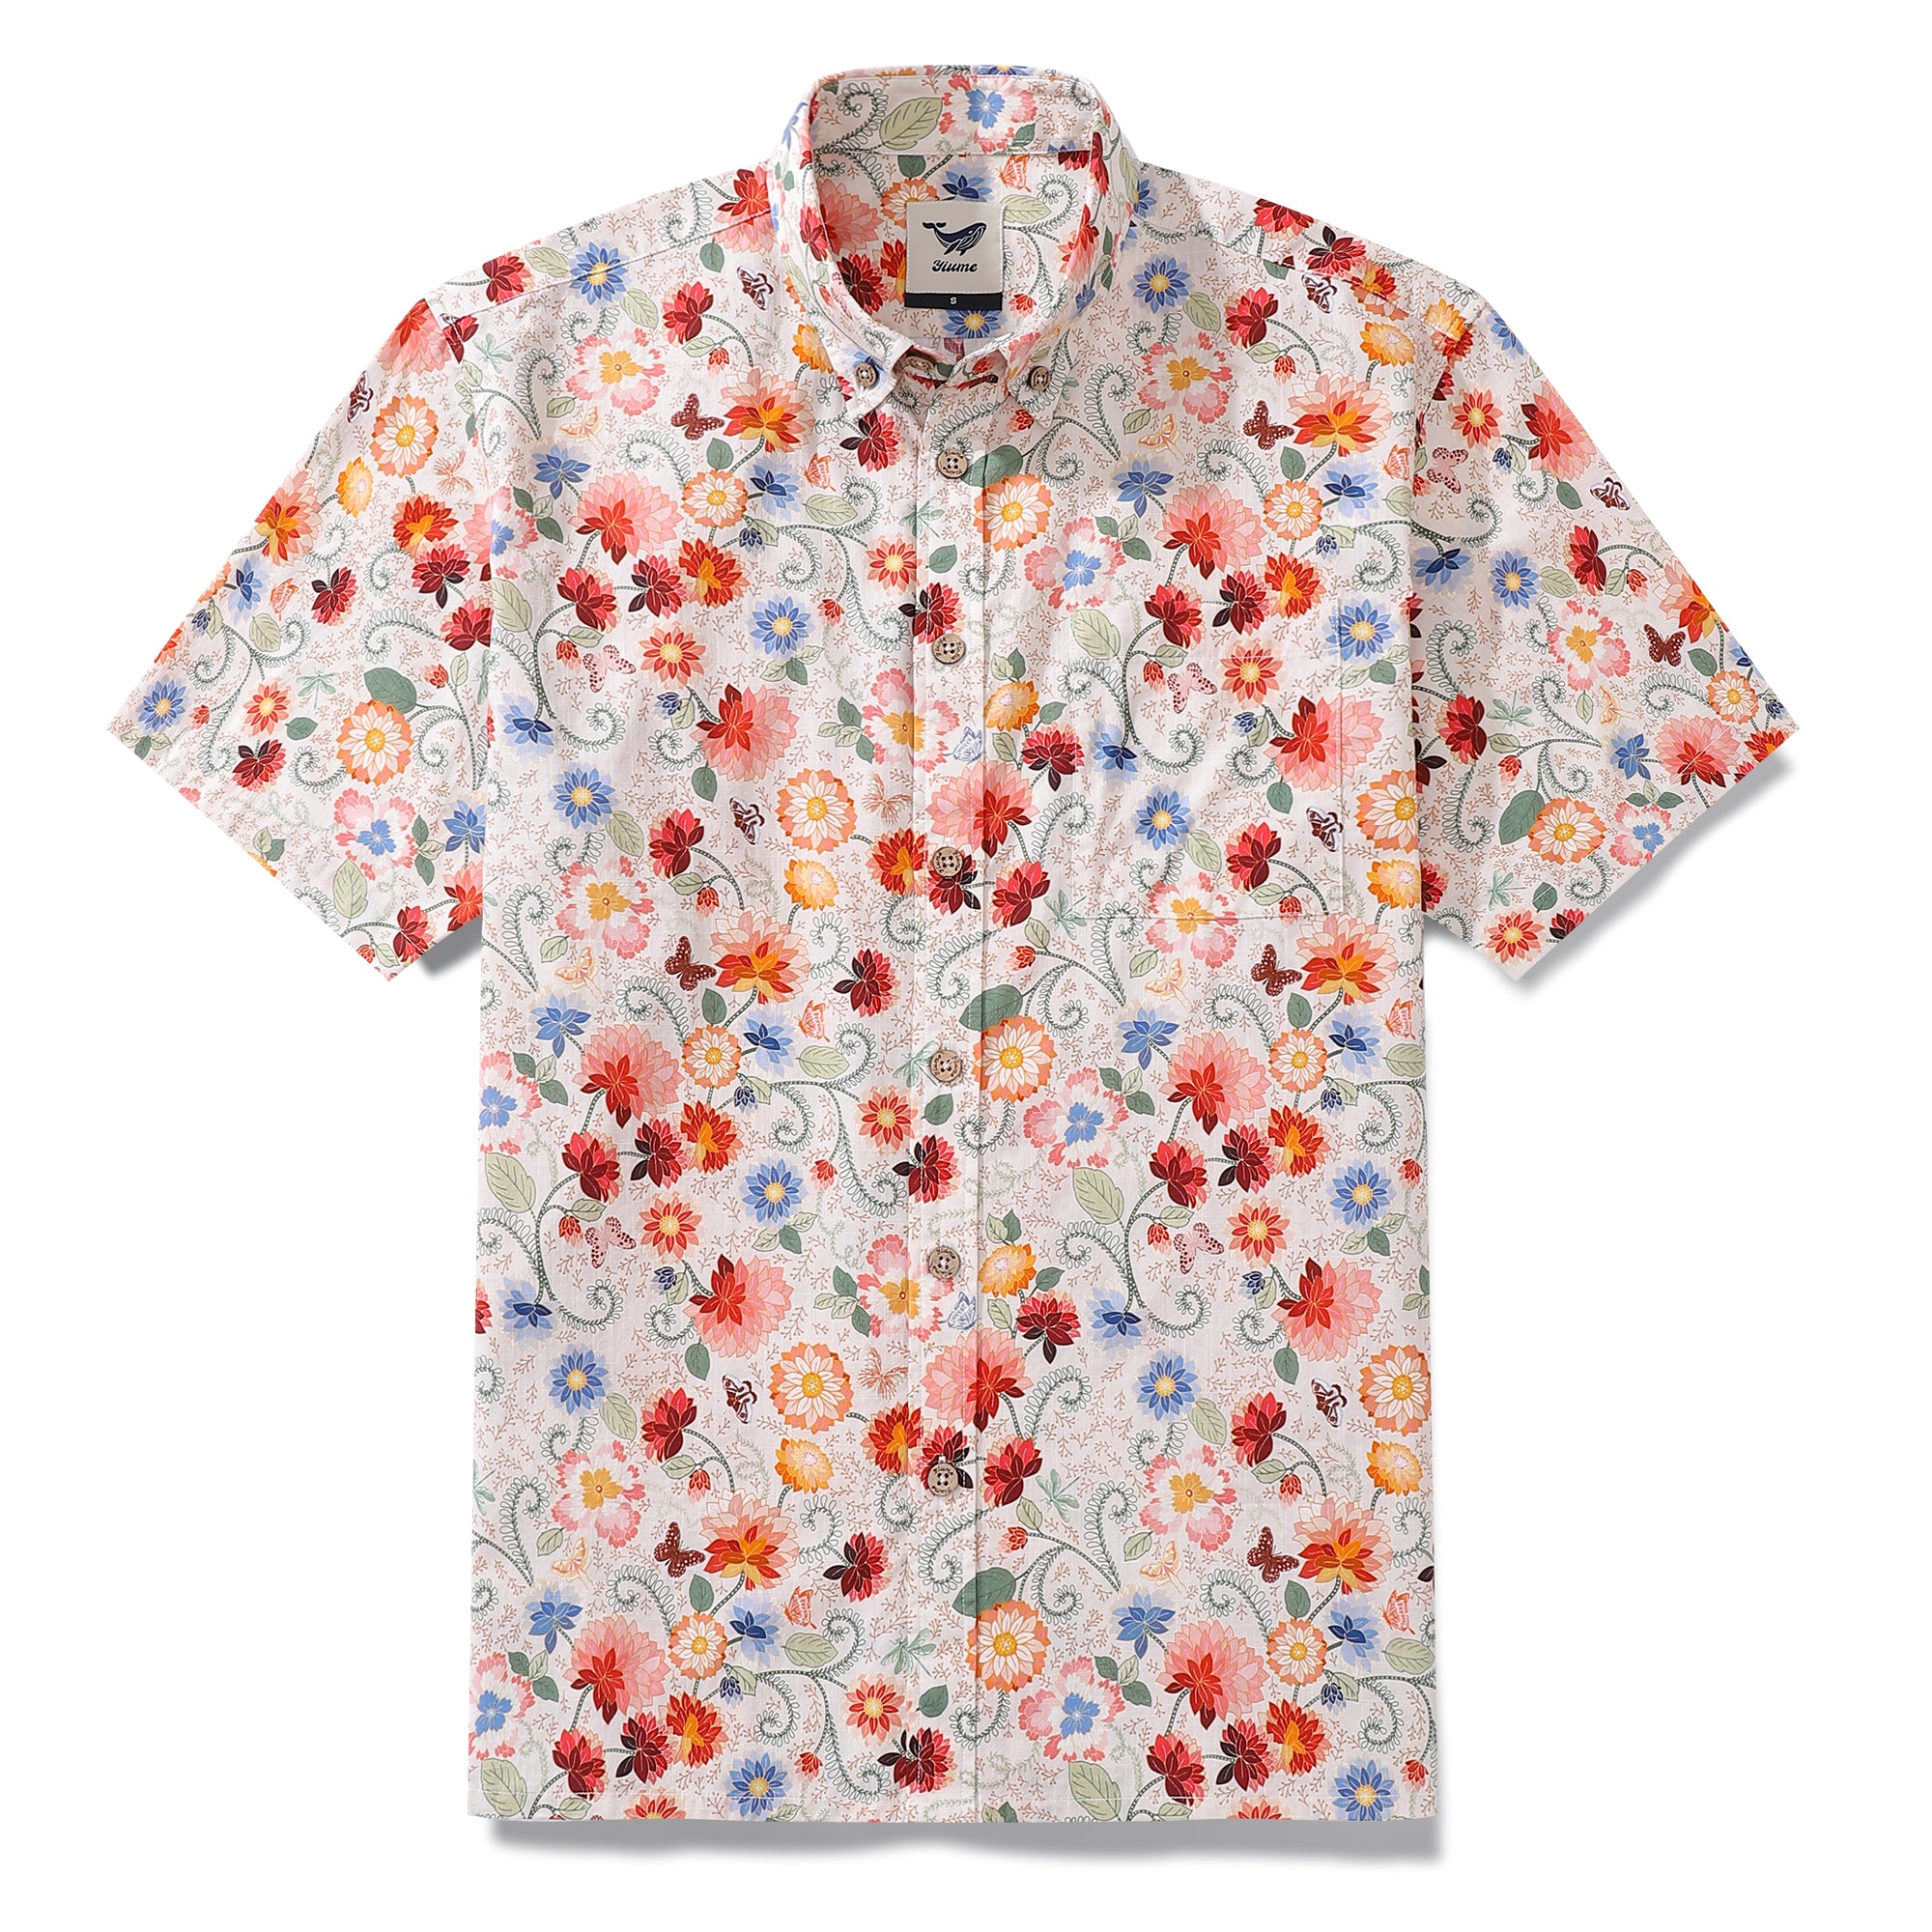 Valentine's Day Men's Hawaiian Shirt1960s Vintage Garden of Color Print Button-down Short Sleeve Aloha Shirt